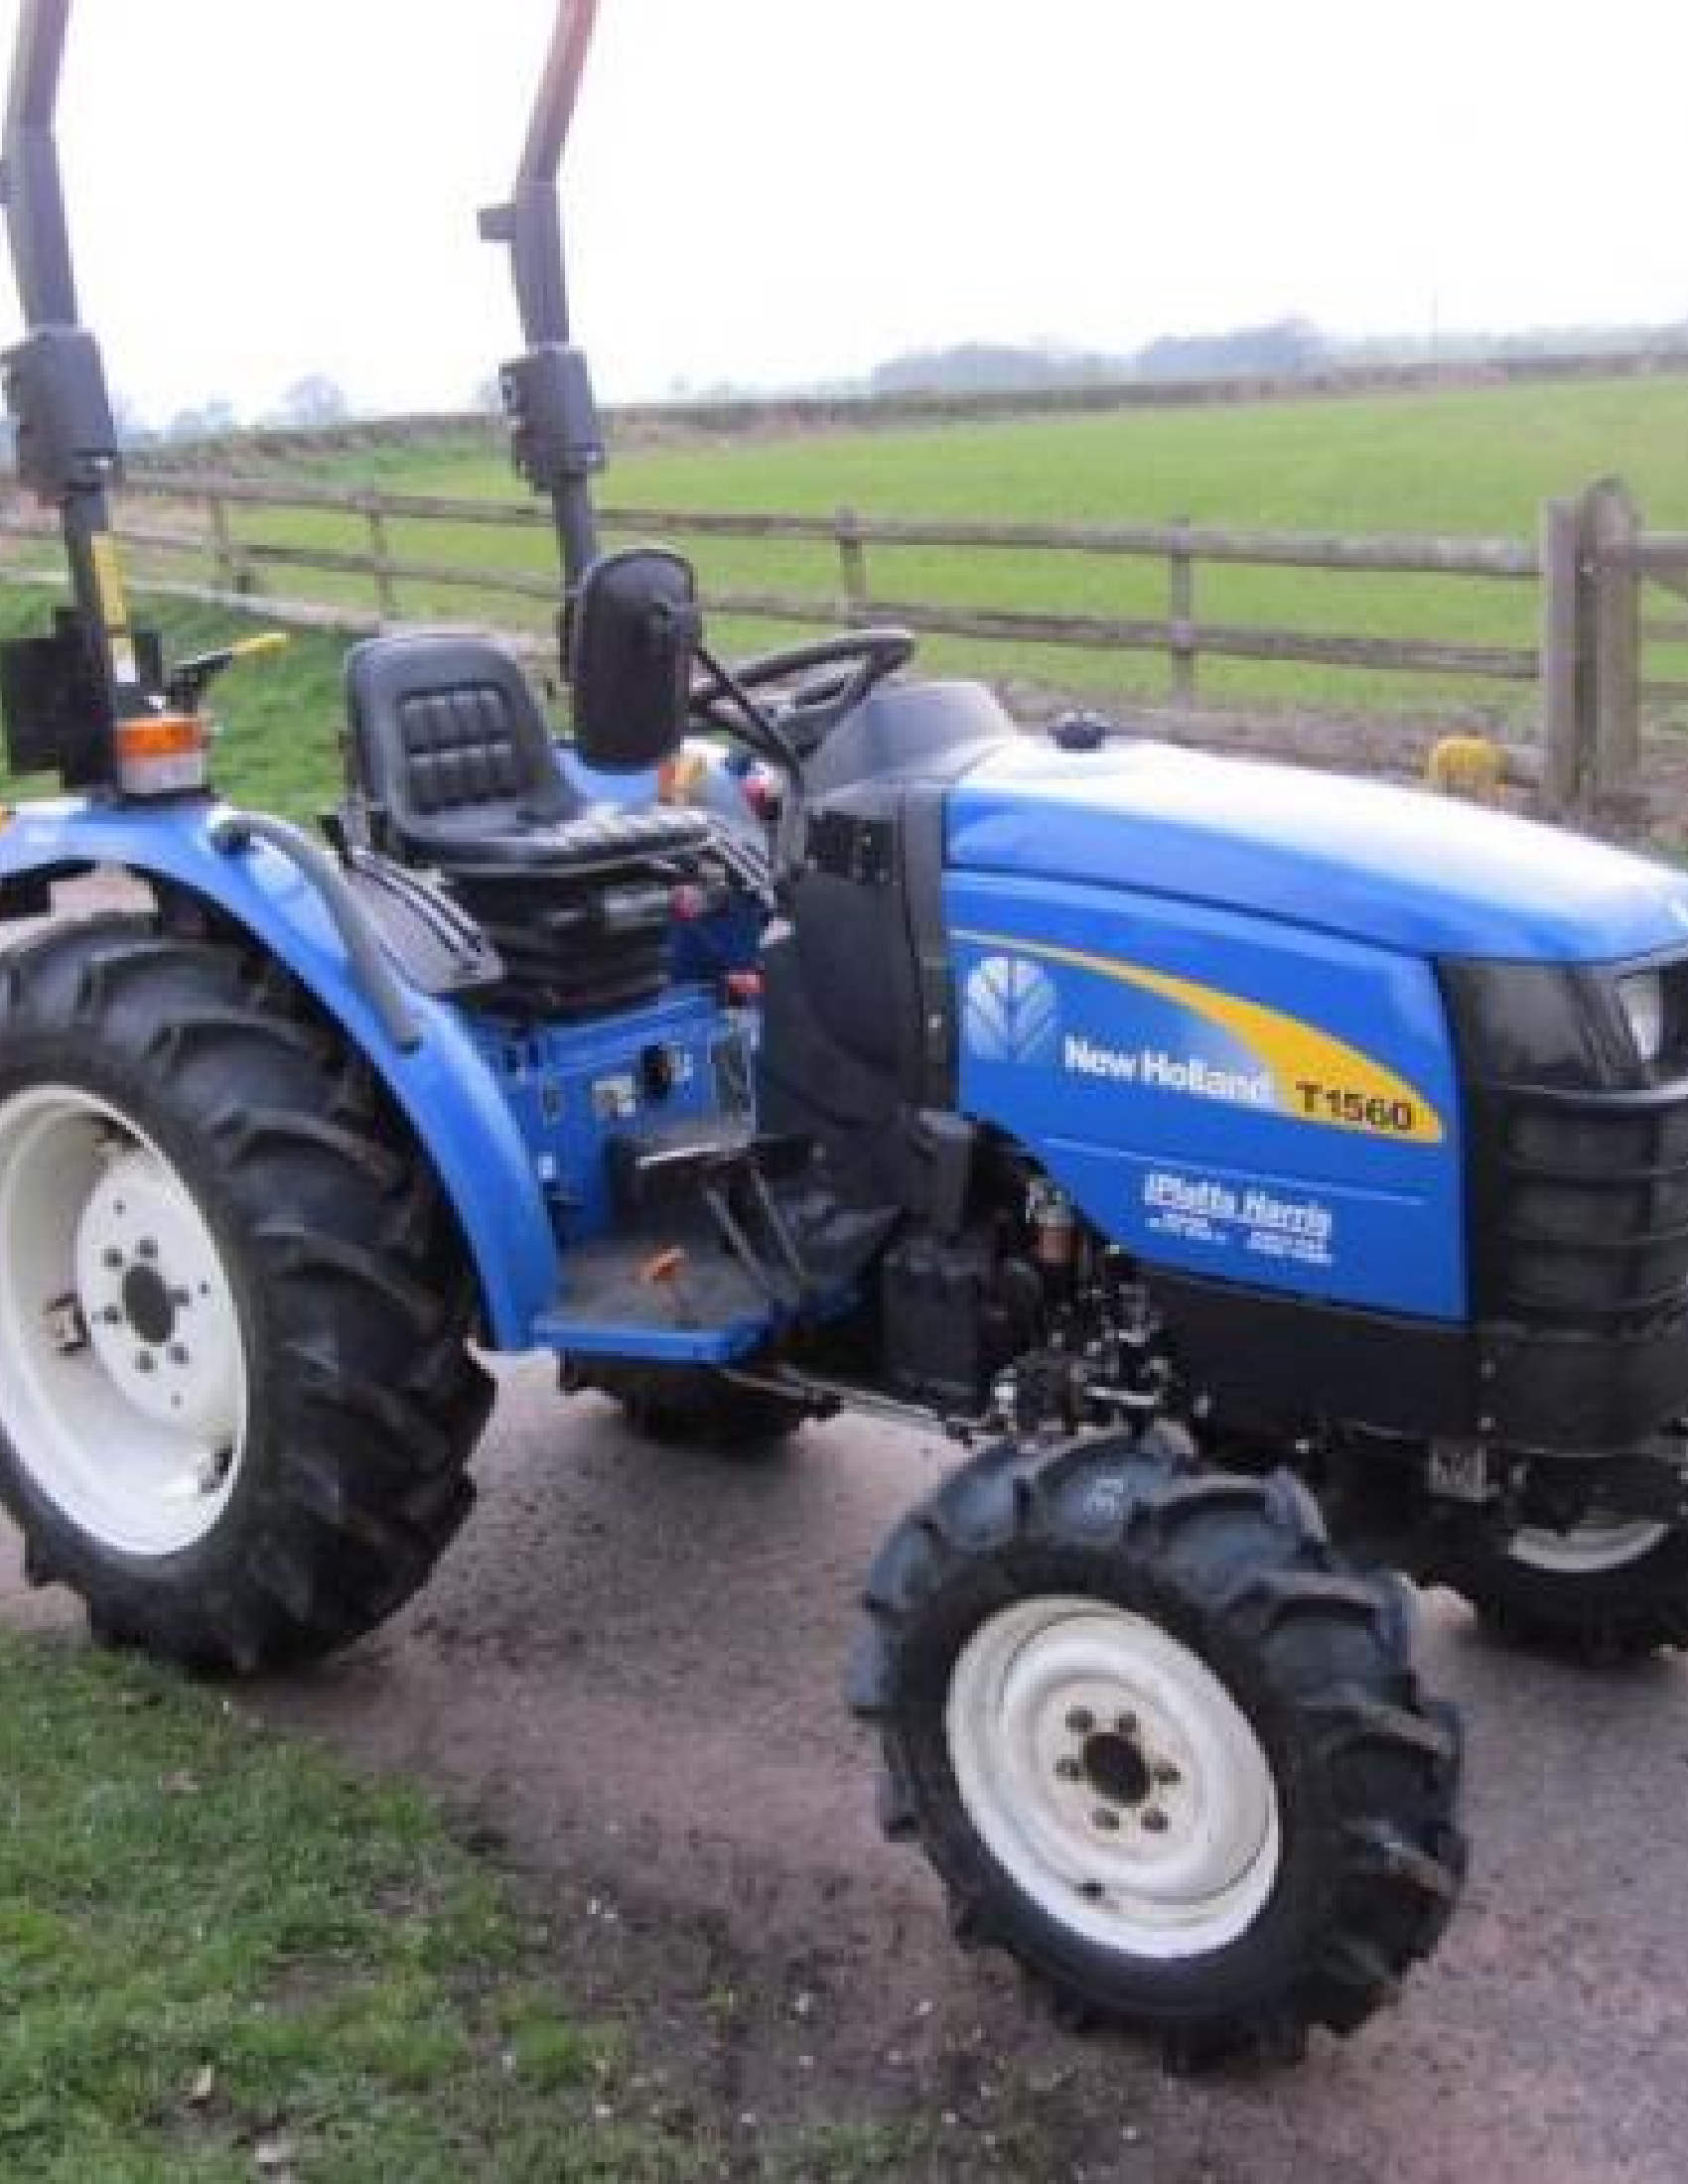 New Holland T1560 Compact Tractors manual